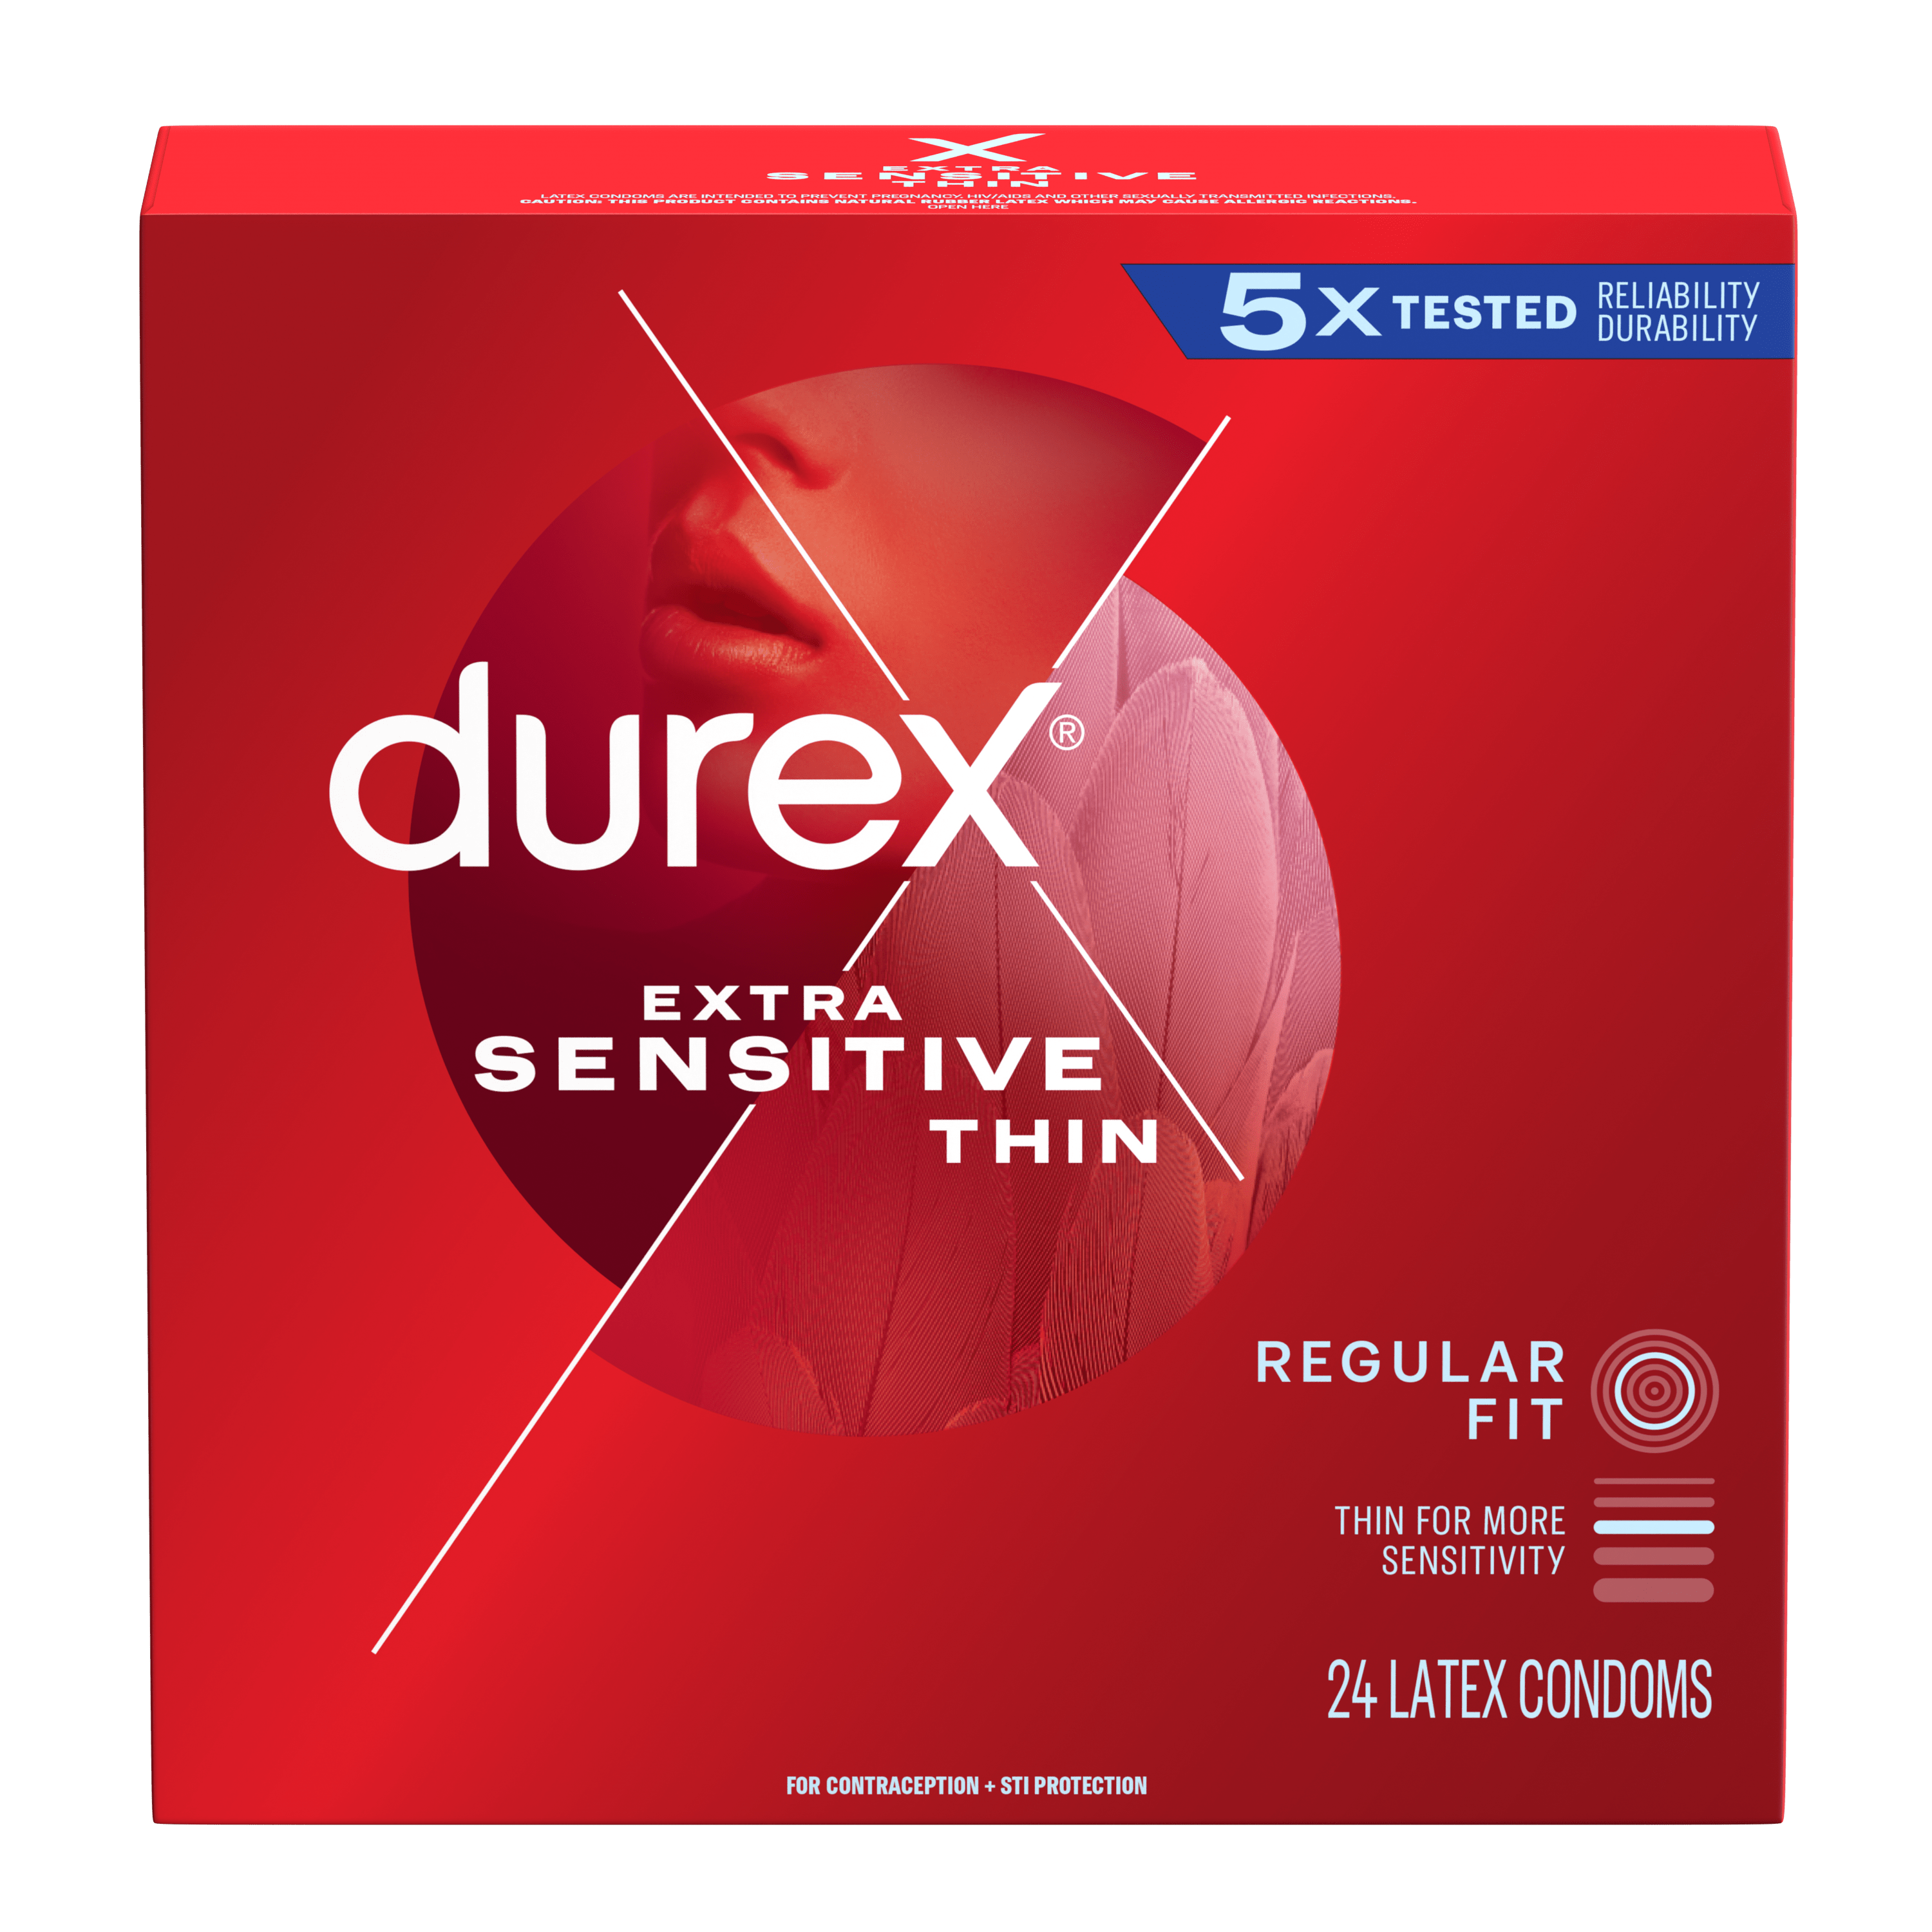 Durex XXL Condoms for Men, Natural Rubber Latex